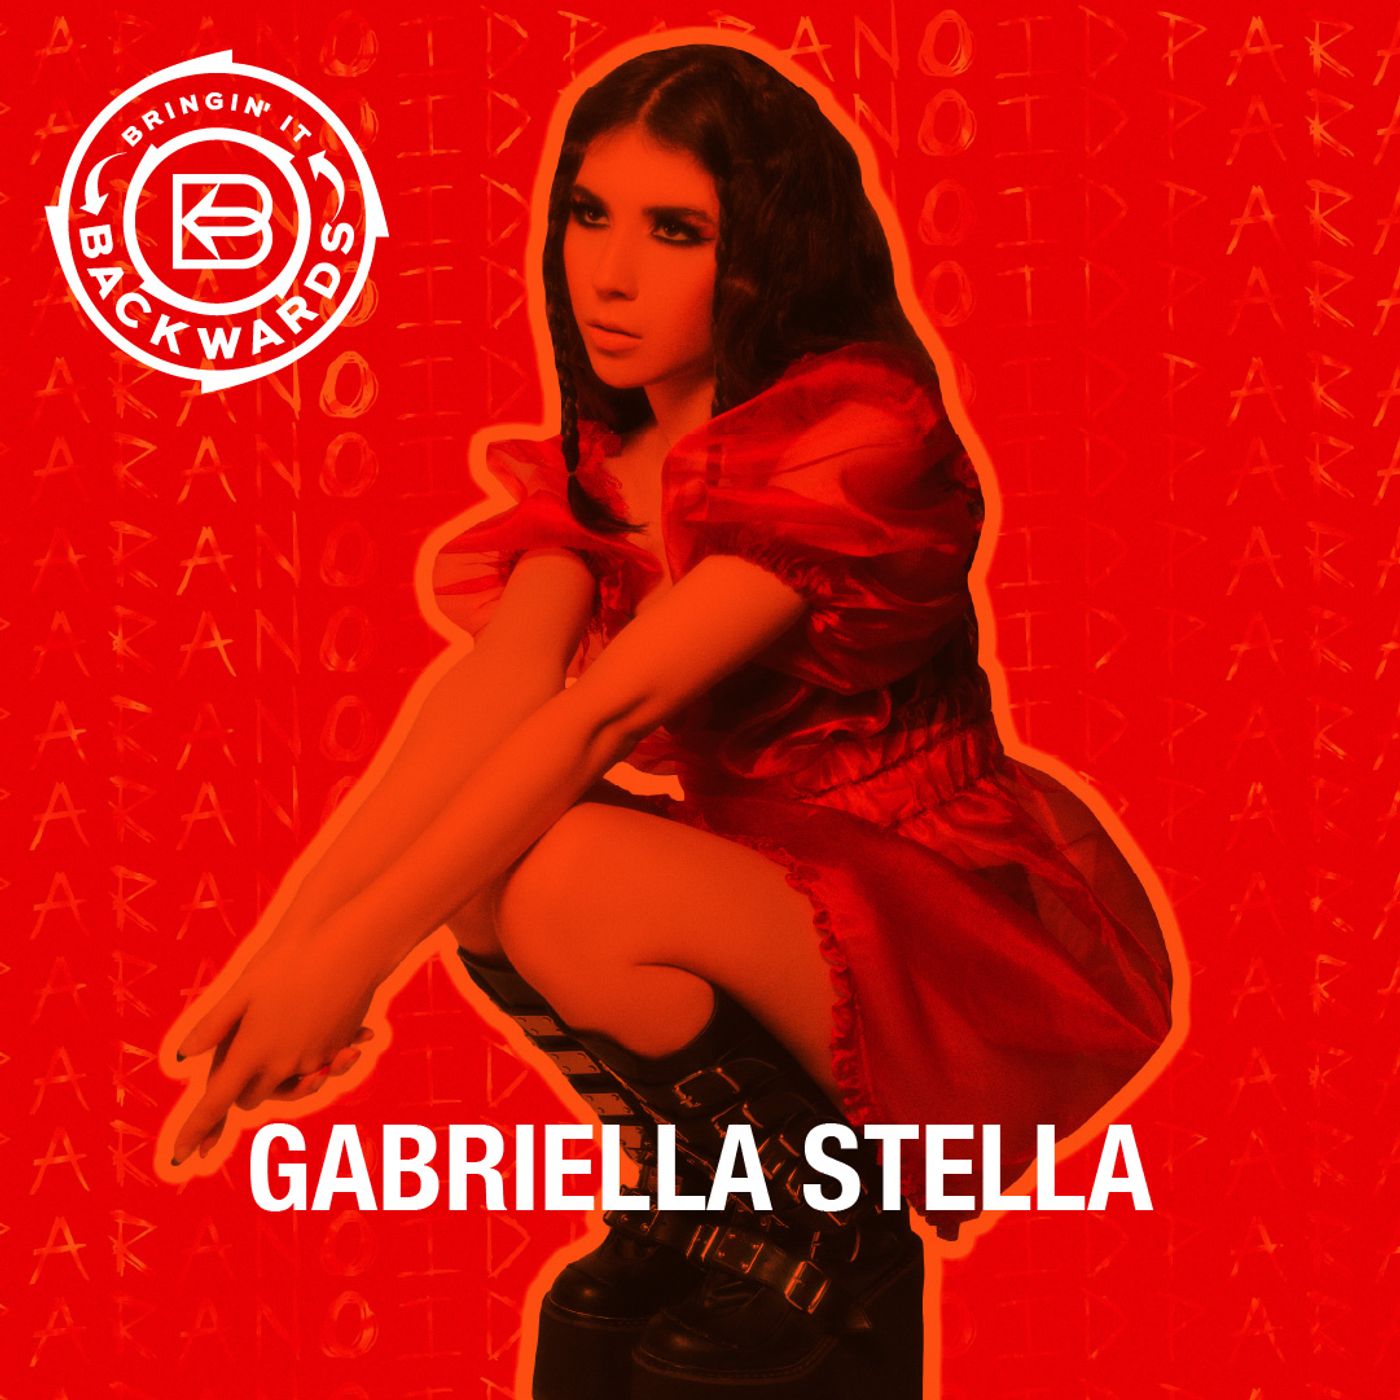 Interview with Gabriella Stella Image